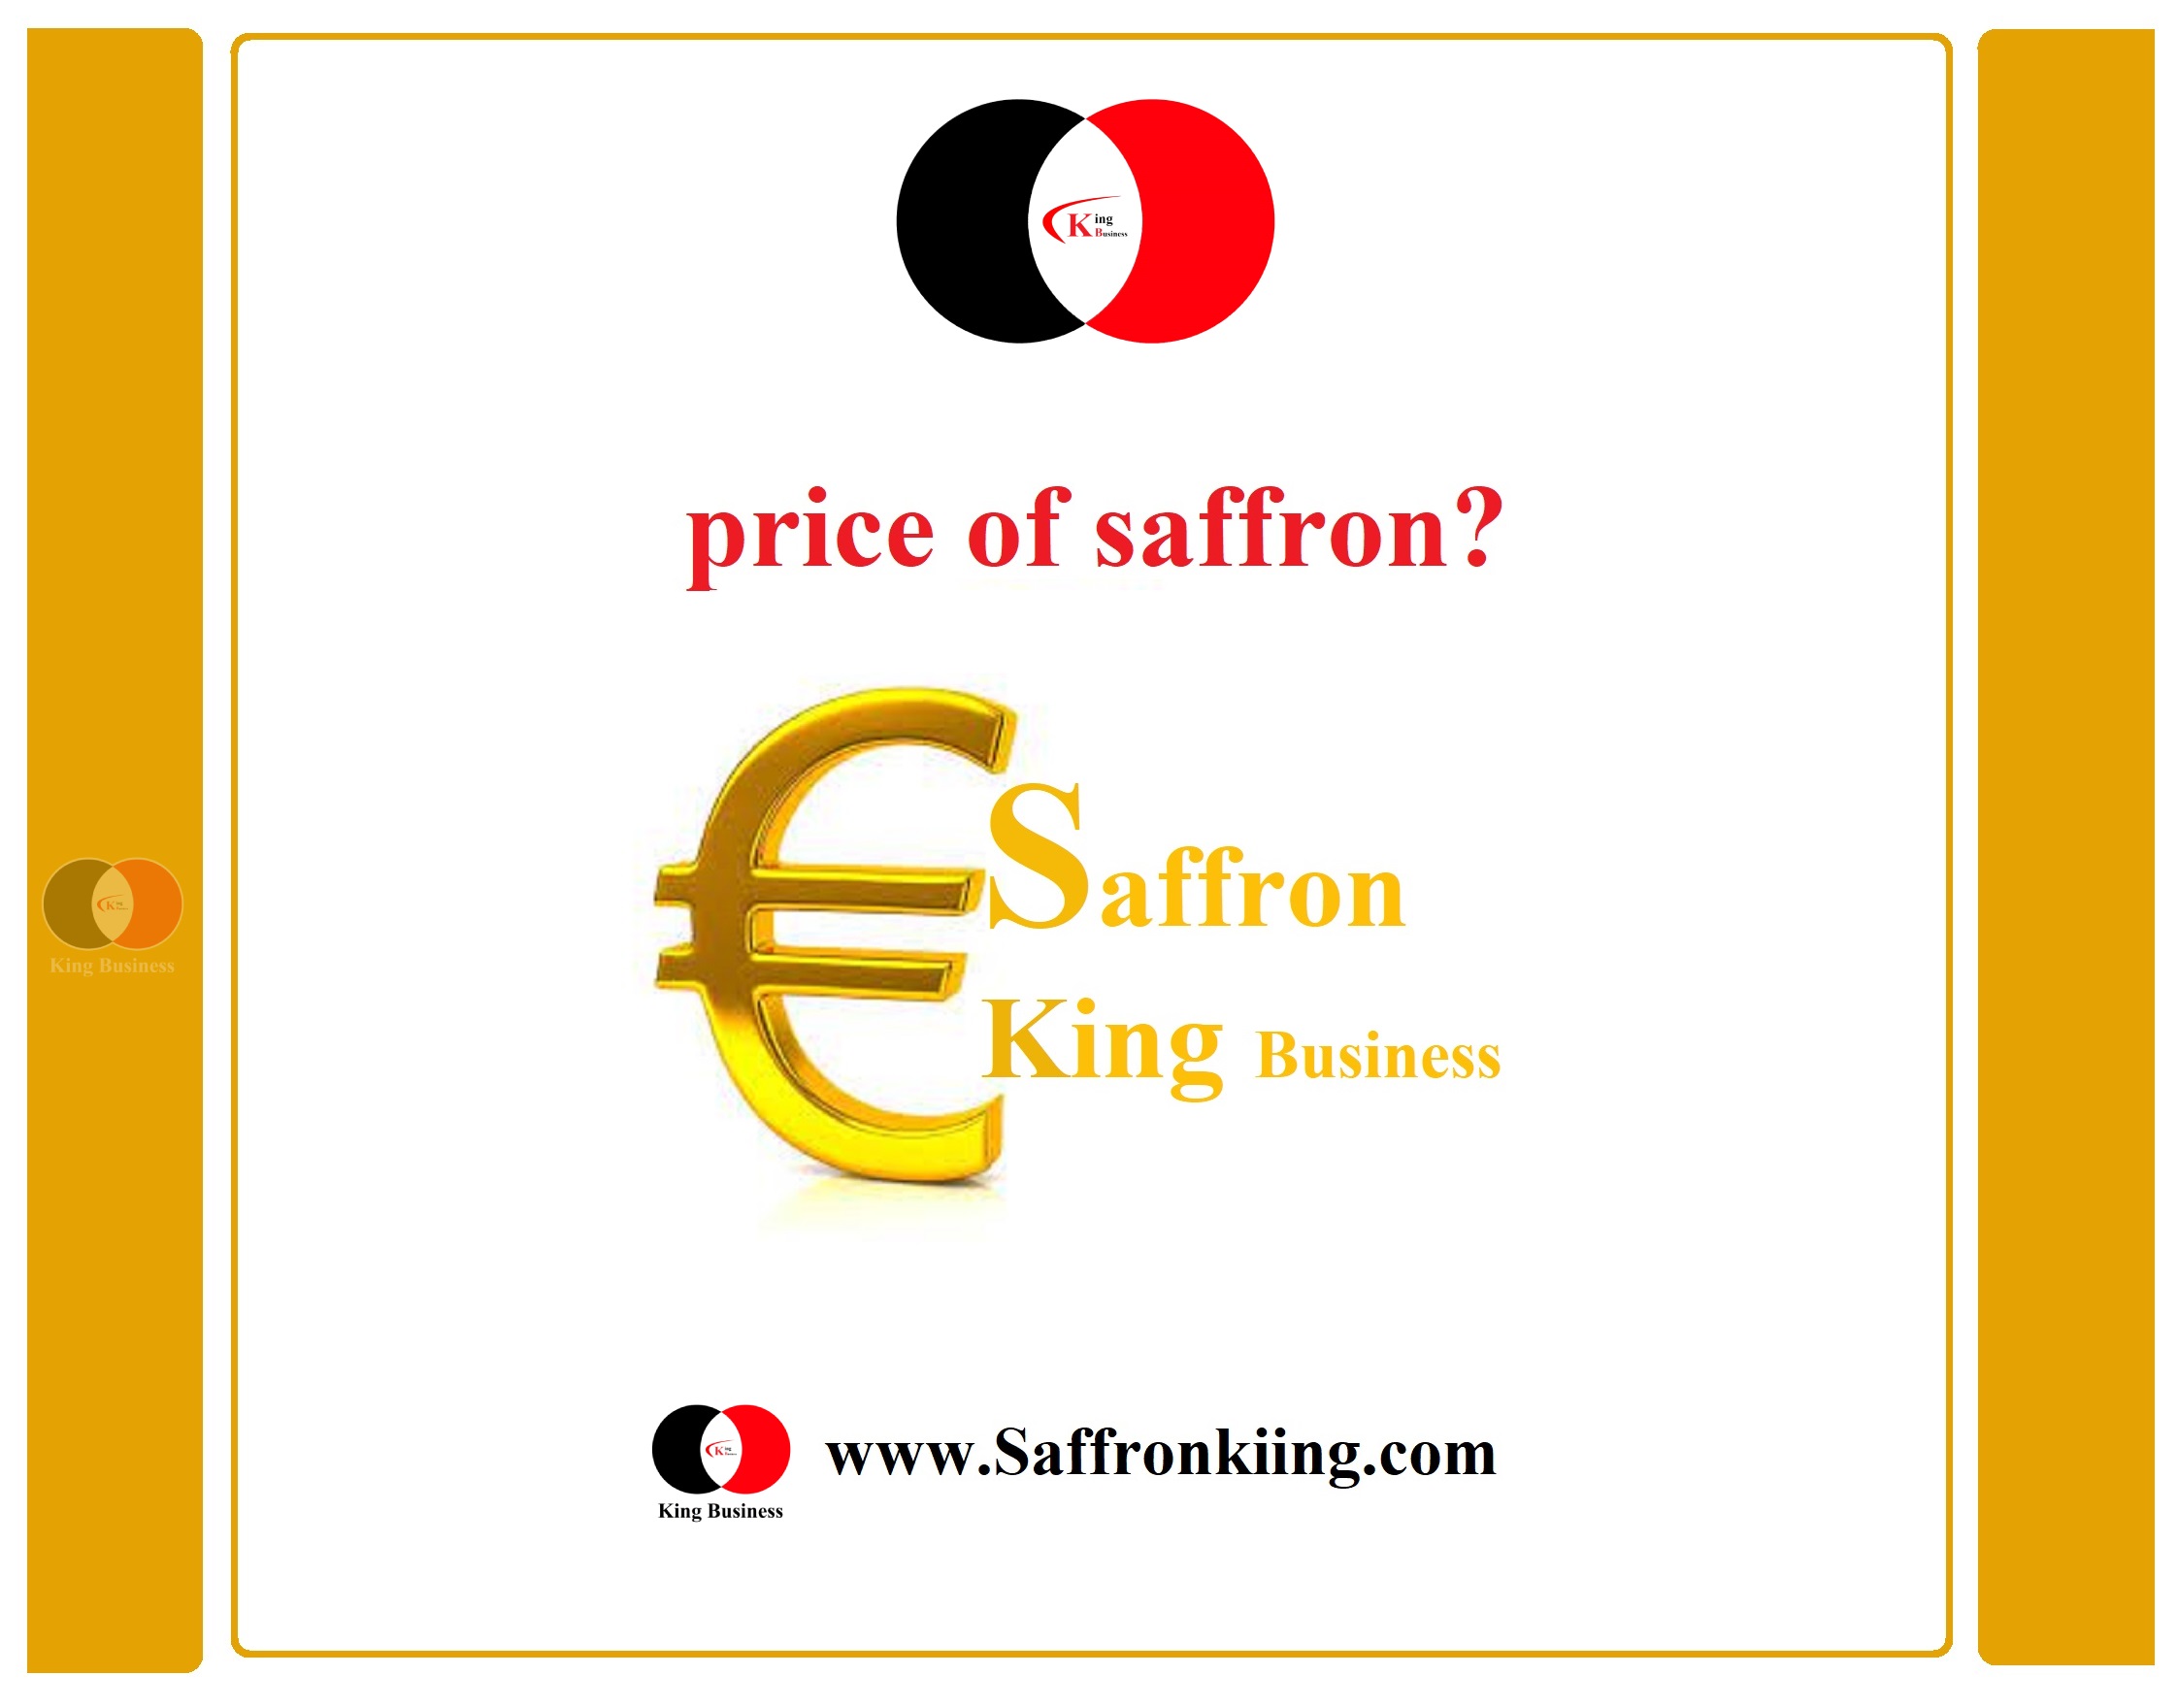 The price of saffron on 10 Sep